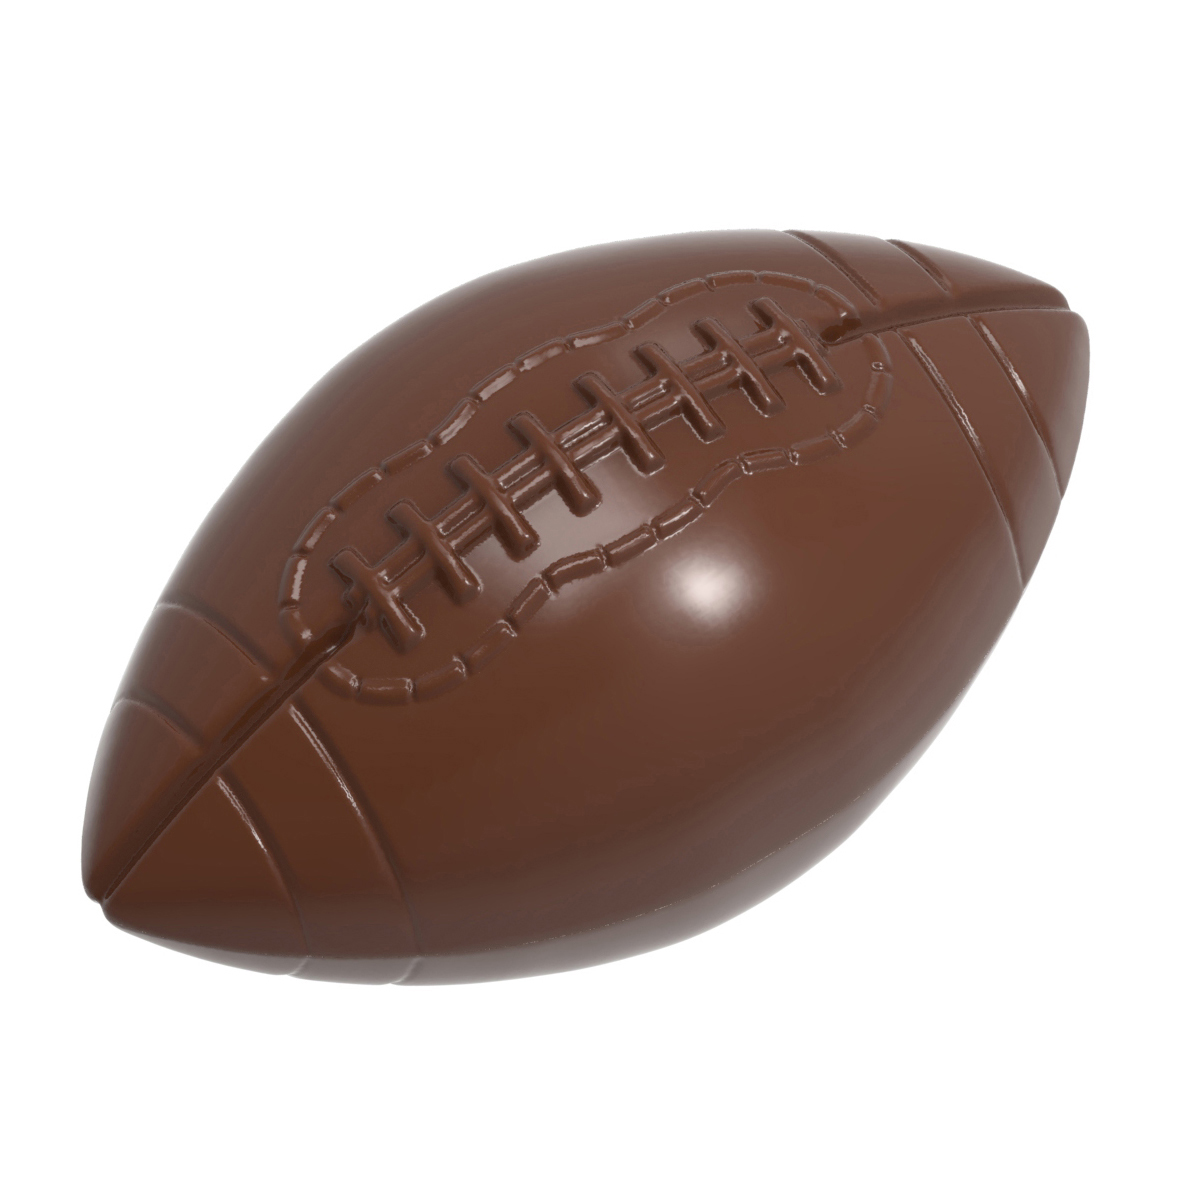 Billede af Amerikansk Fodbold Chokoladeform, Chocolate World